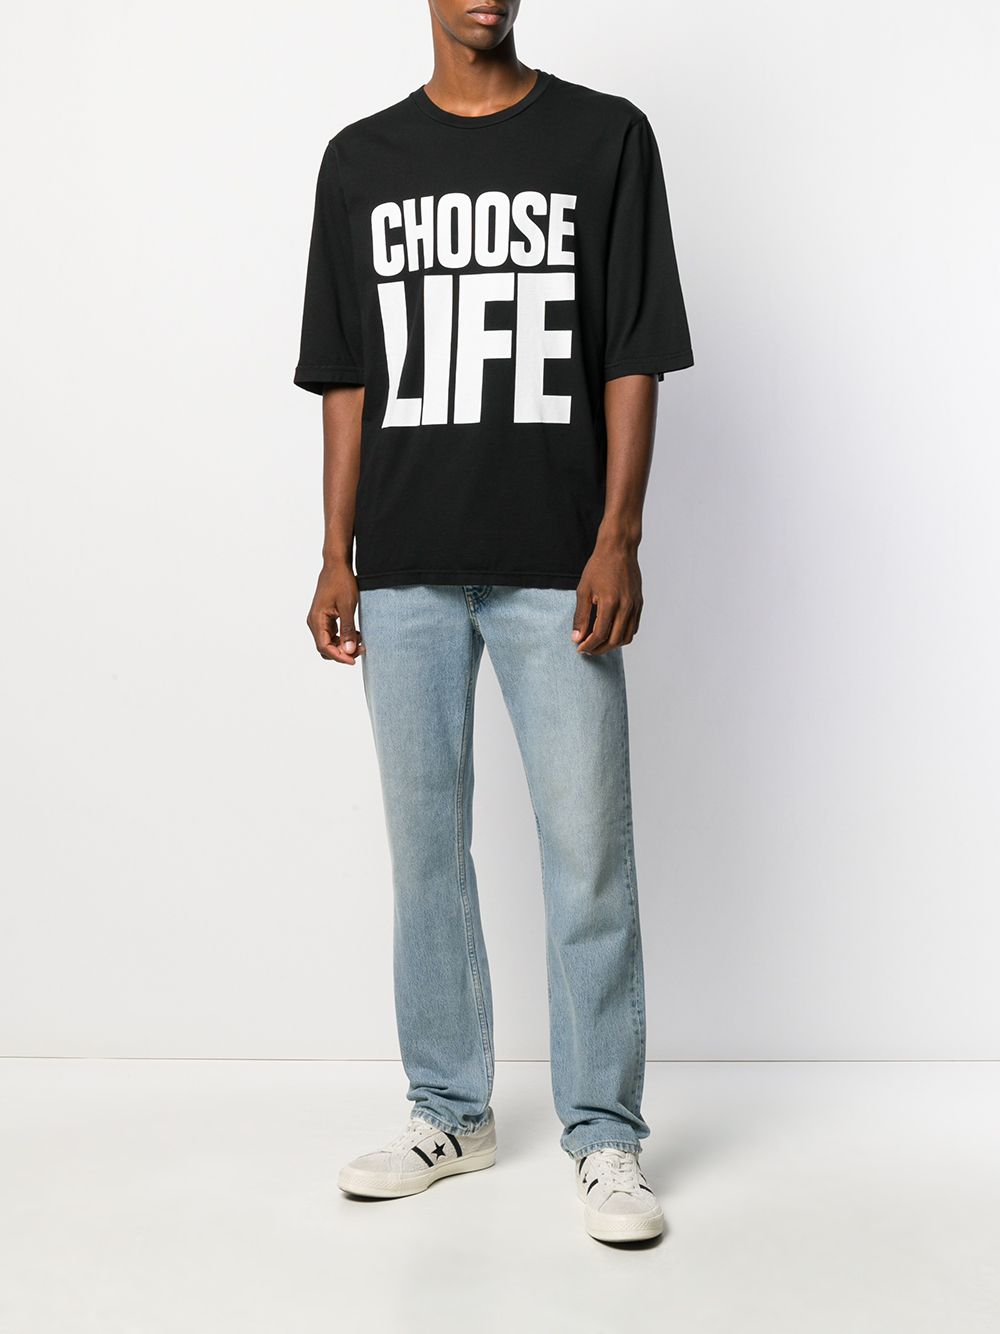 фото Katharine Hamnett London футболка Choose Life